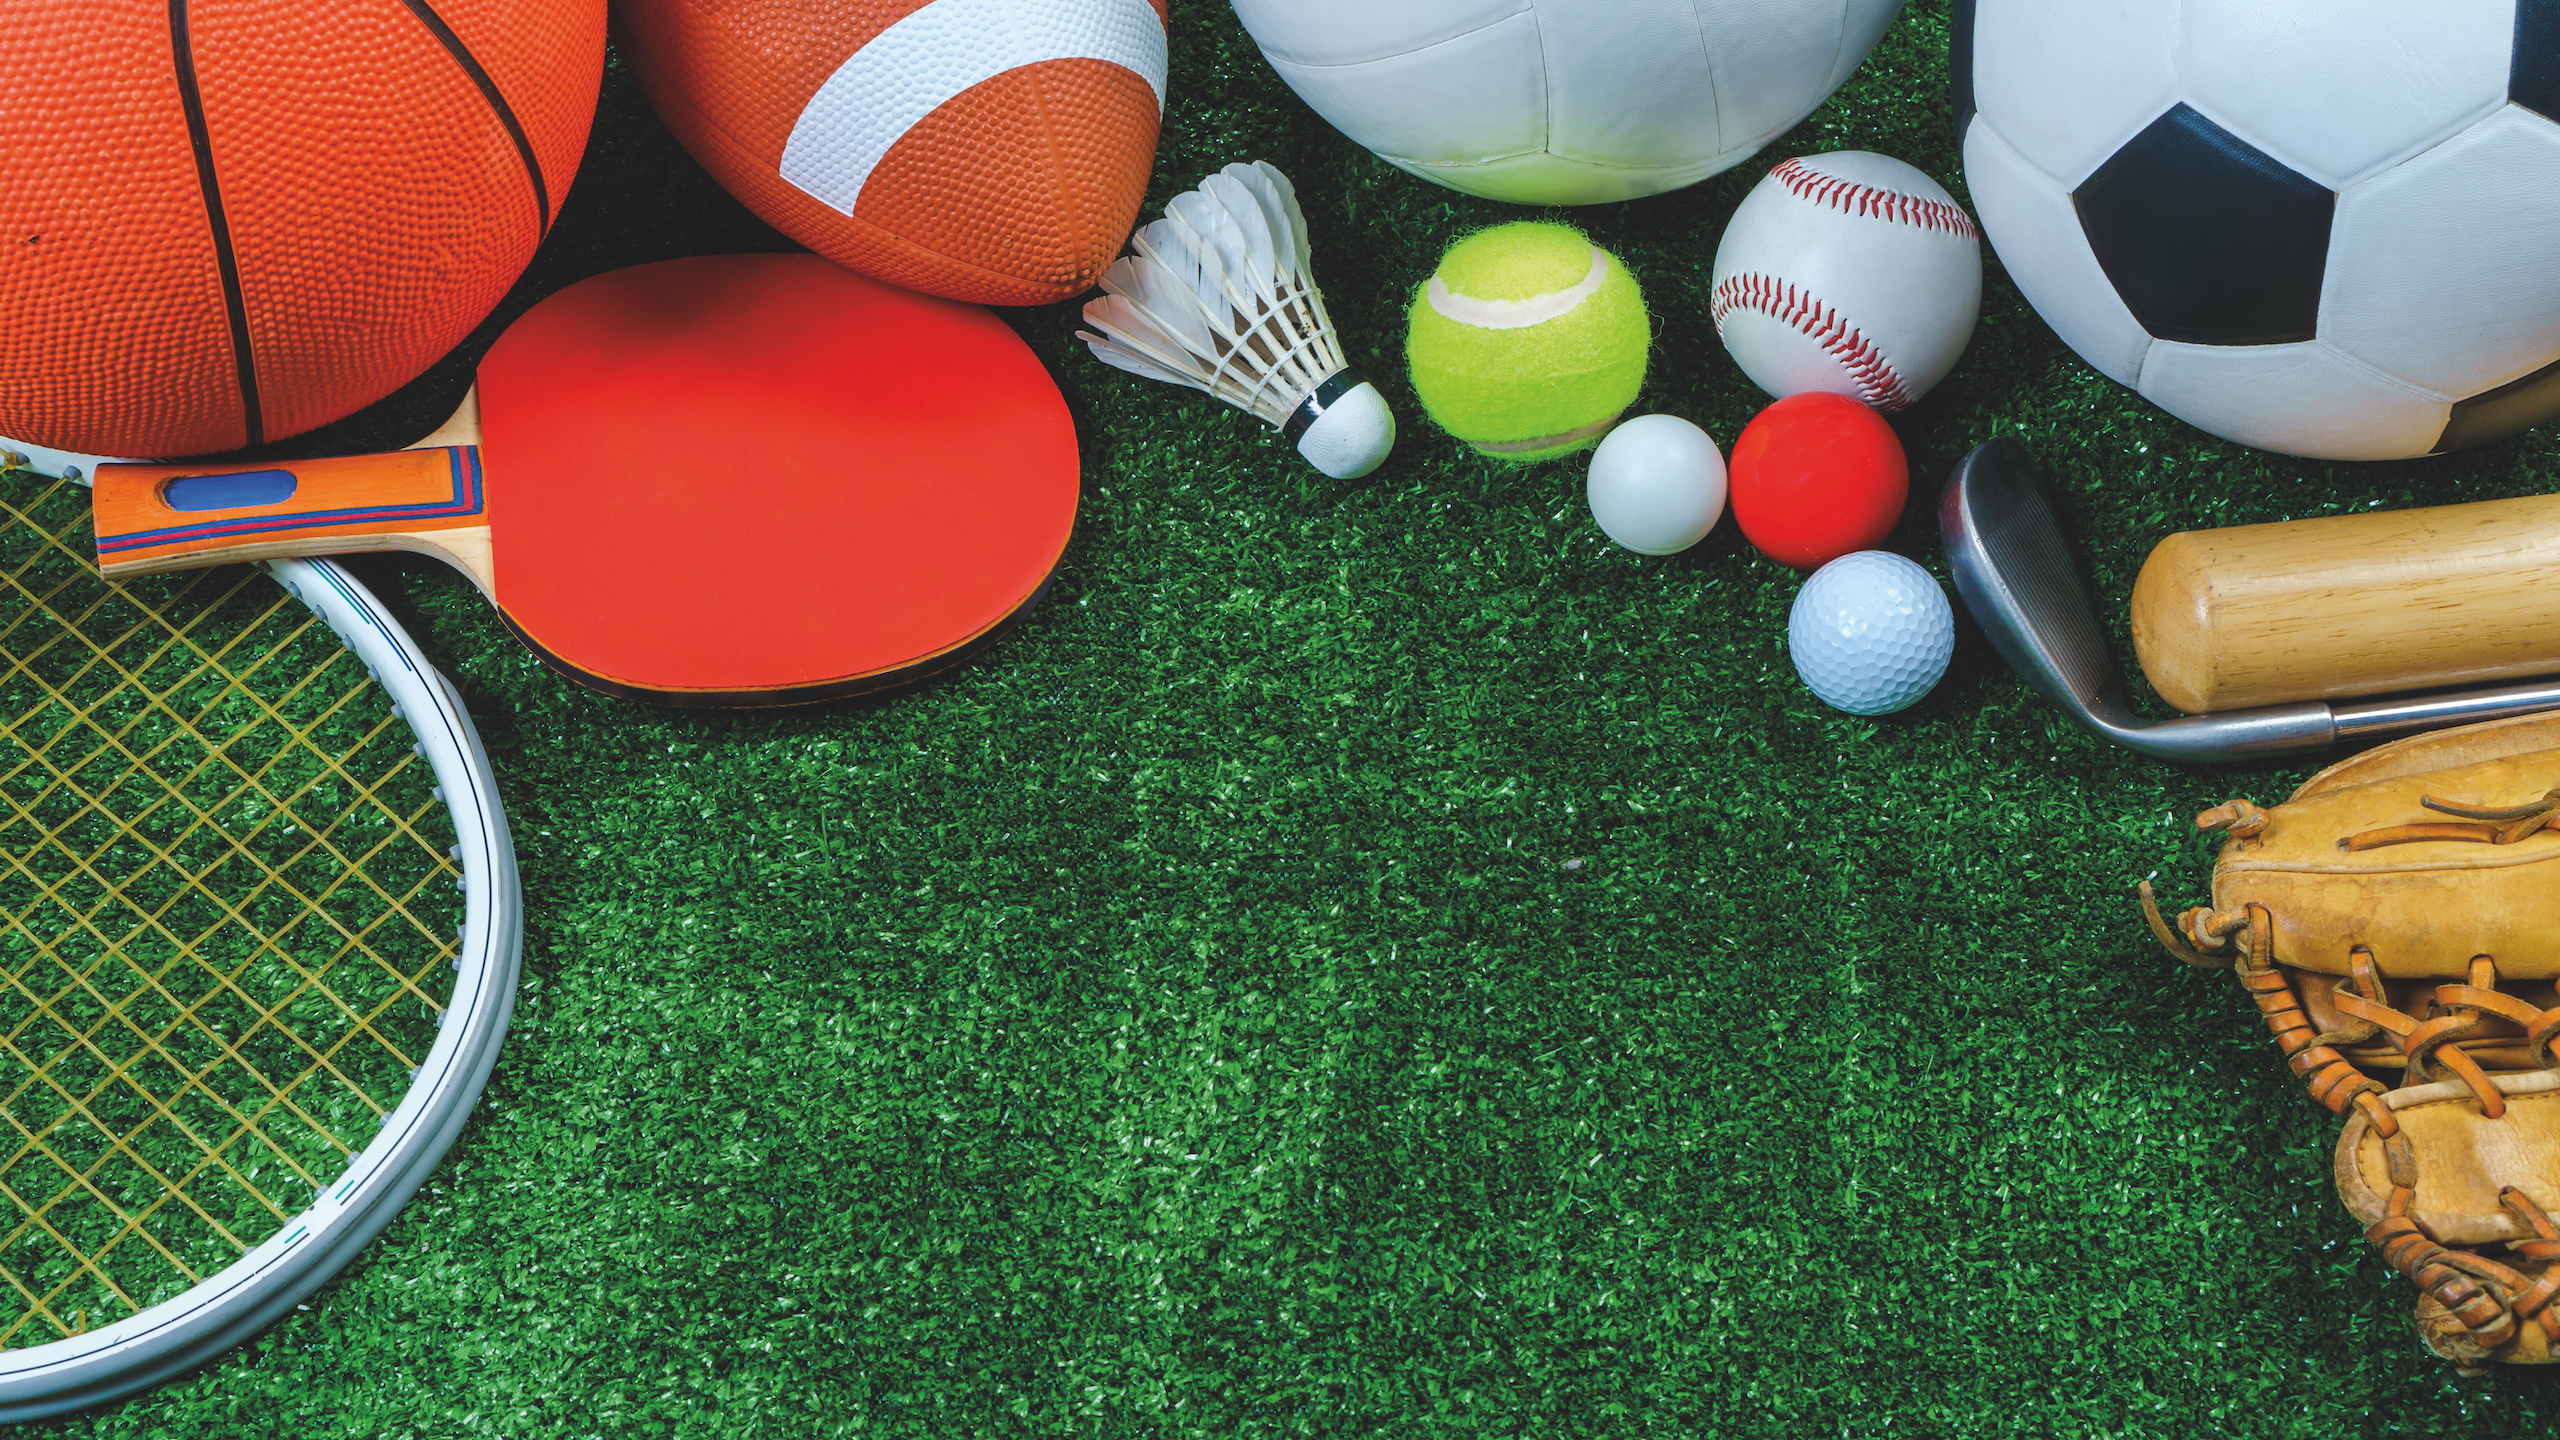 Palloni da calcio, basket, rugby, pallavolo, tennis, pin pong, baseball, golf e altri sport vari